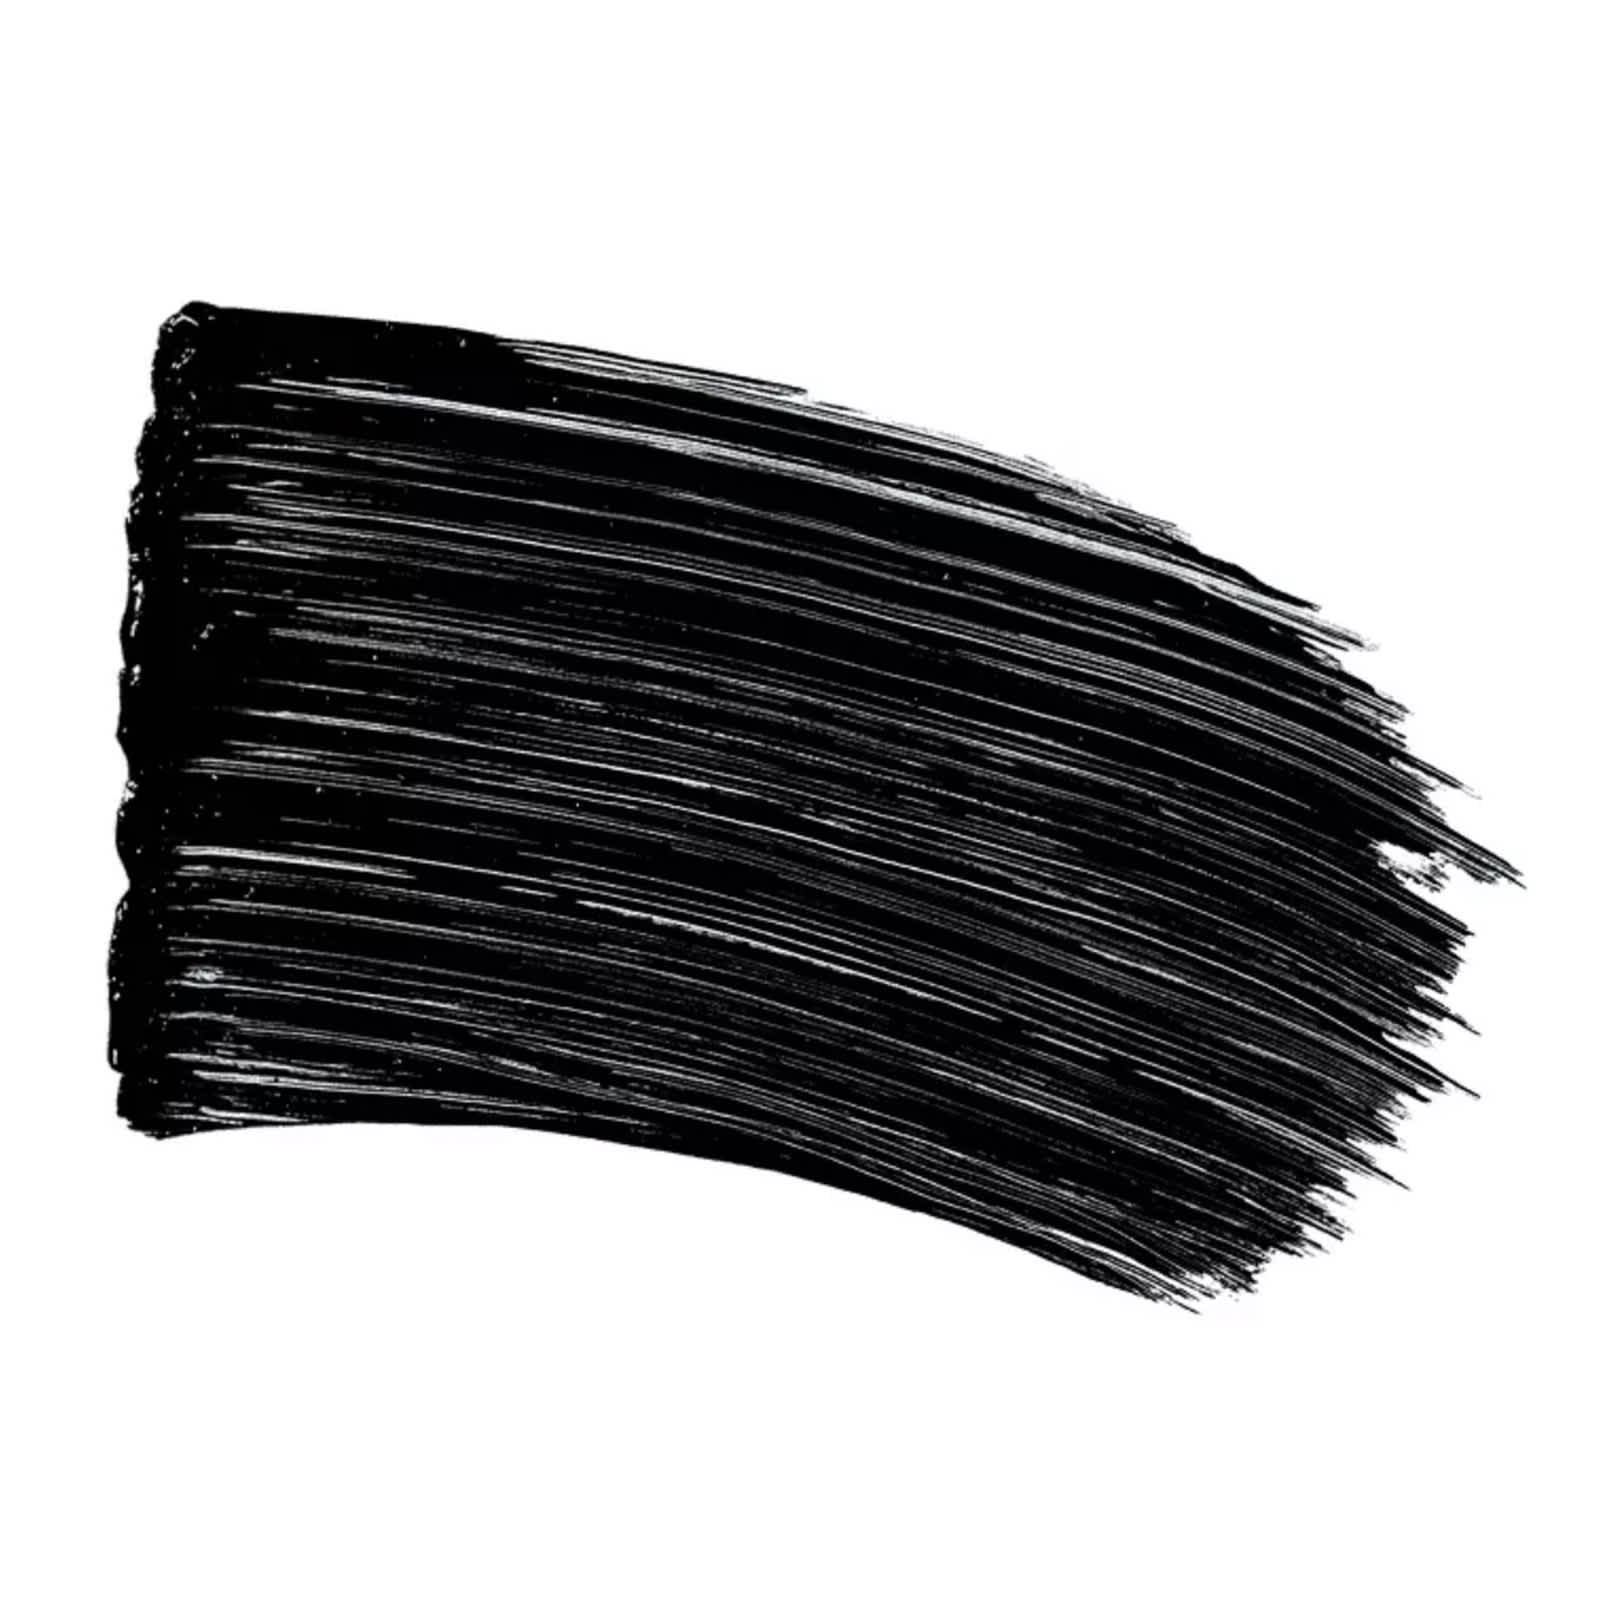 L'Oreal, Voluminous Original Mascara, 310 Blackest Black, 0.28 fl oz (8 ml)